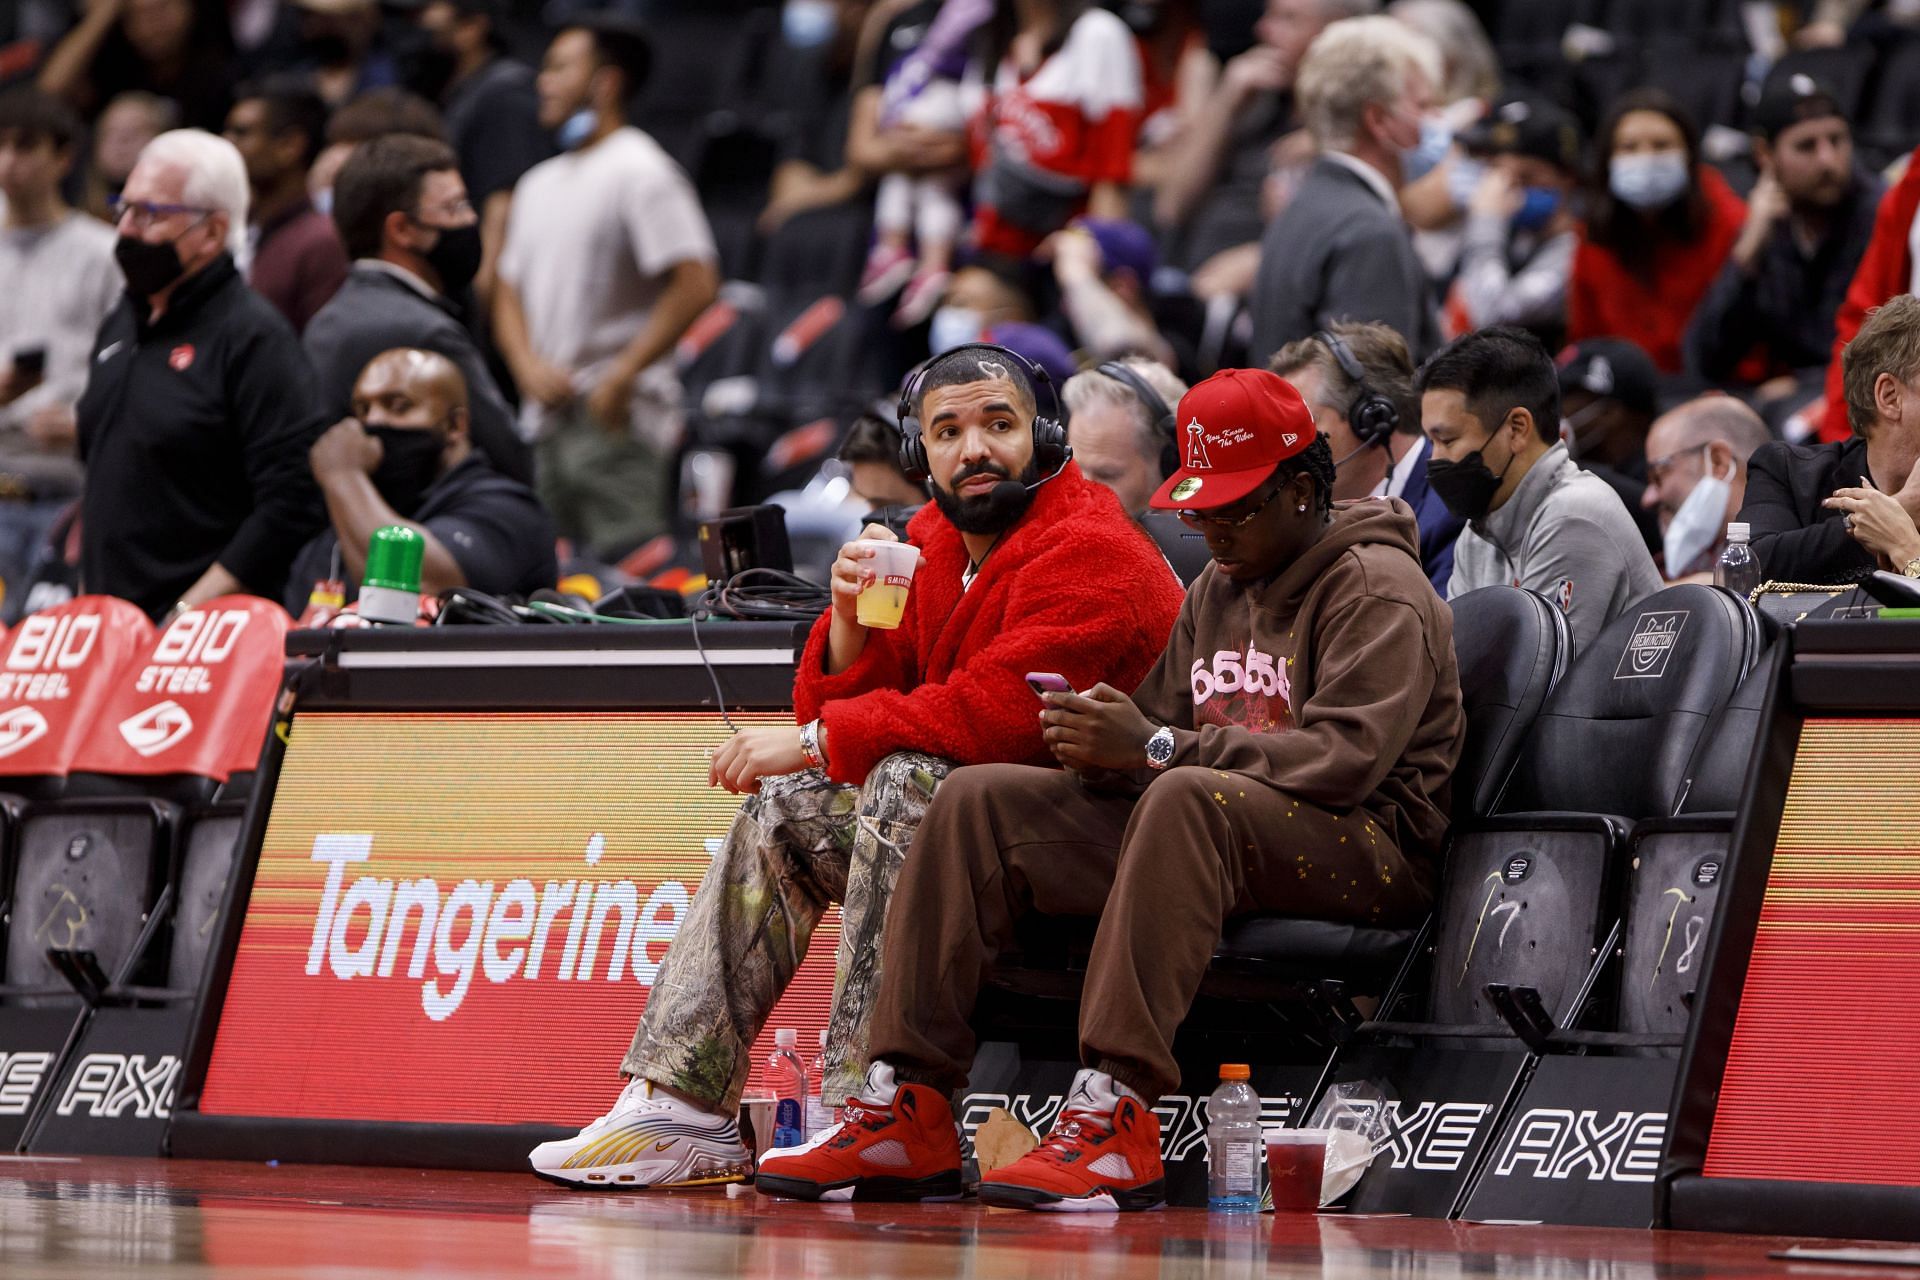 Drake Night 2016: Despite Raptors' Loss to Warriors, Toronto Still Wins